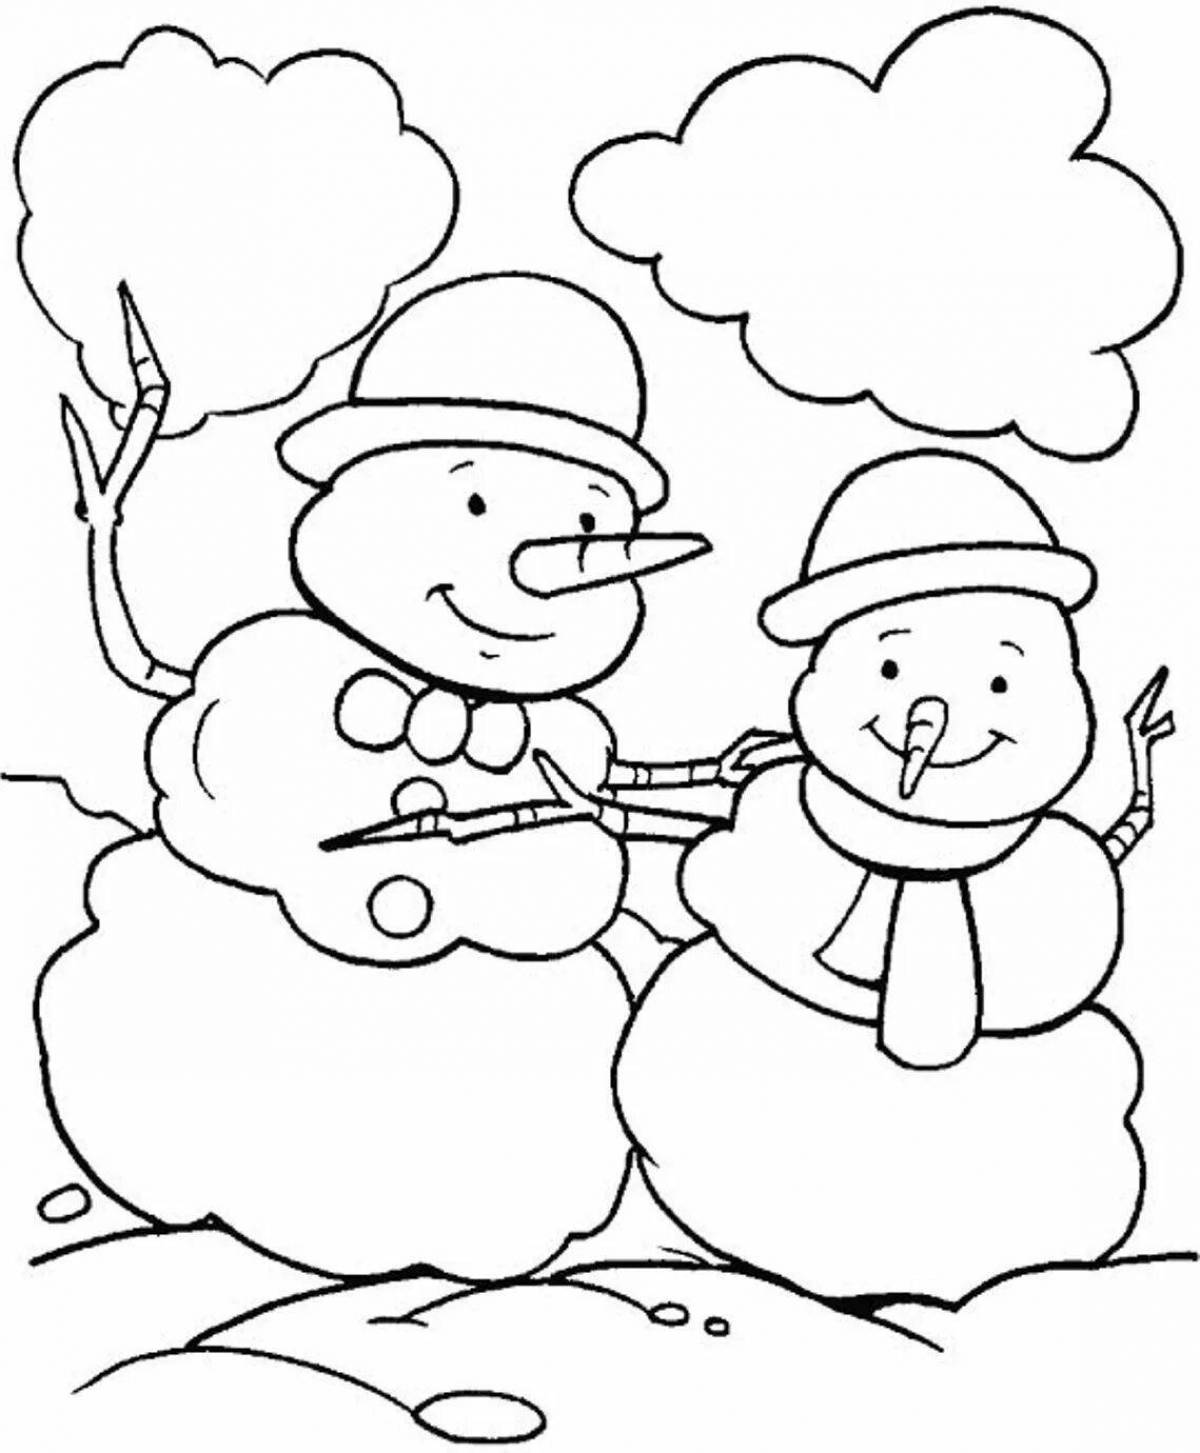 Dreamy winter coloring book